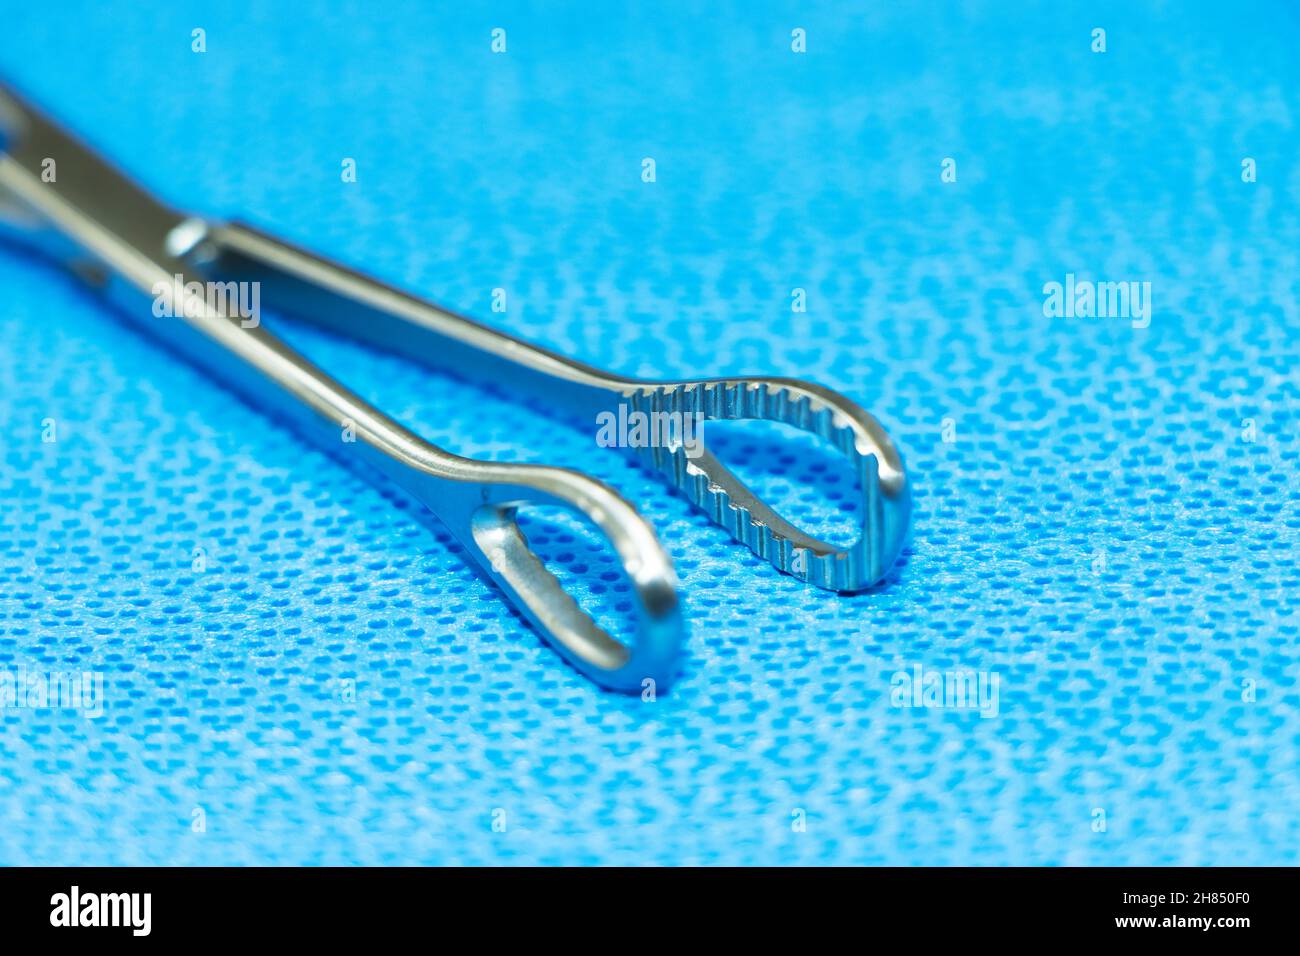 Closeup Image Of Medical Surgical Sponge Holder Tip. Selective Focus Stock Photo